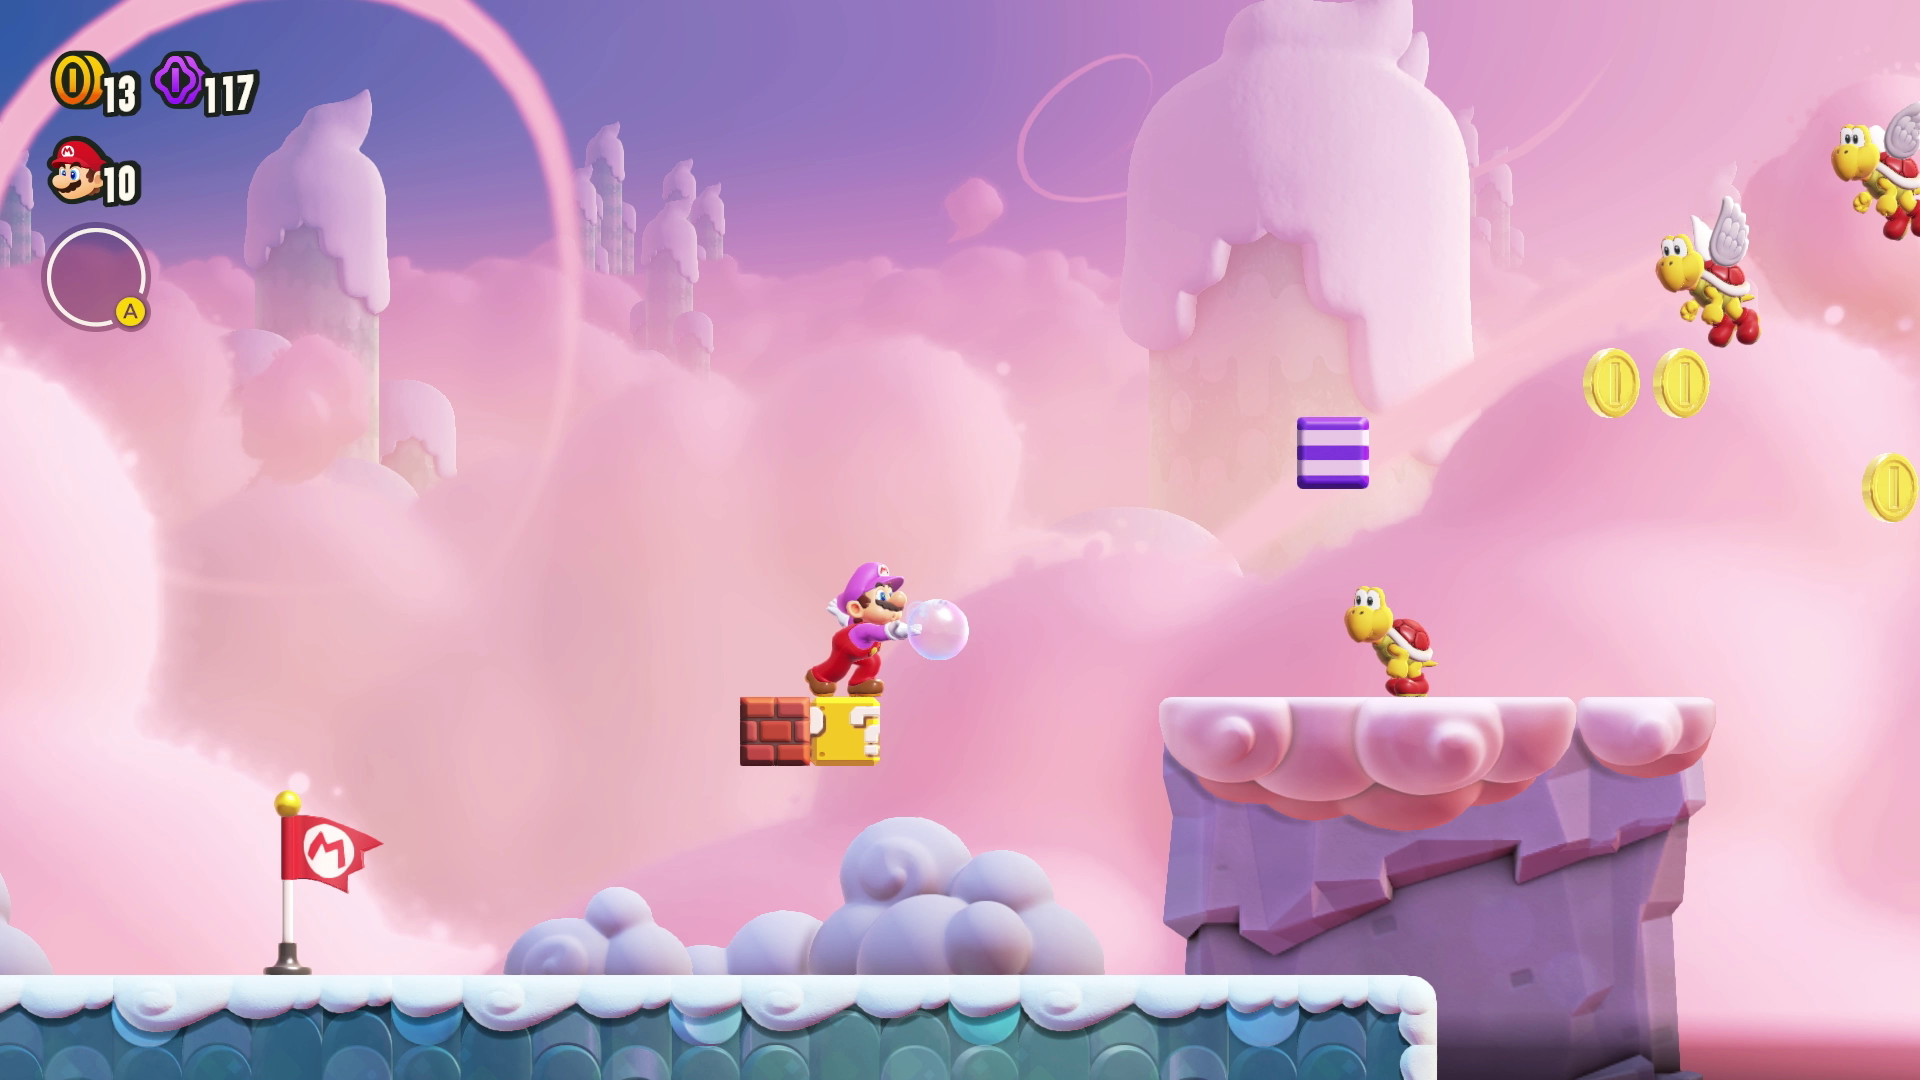 Screenshots from Super Mario Bros. Wonder, provided by Nintendo